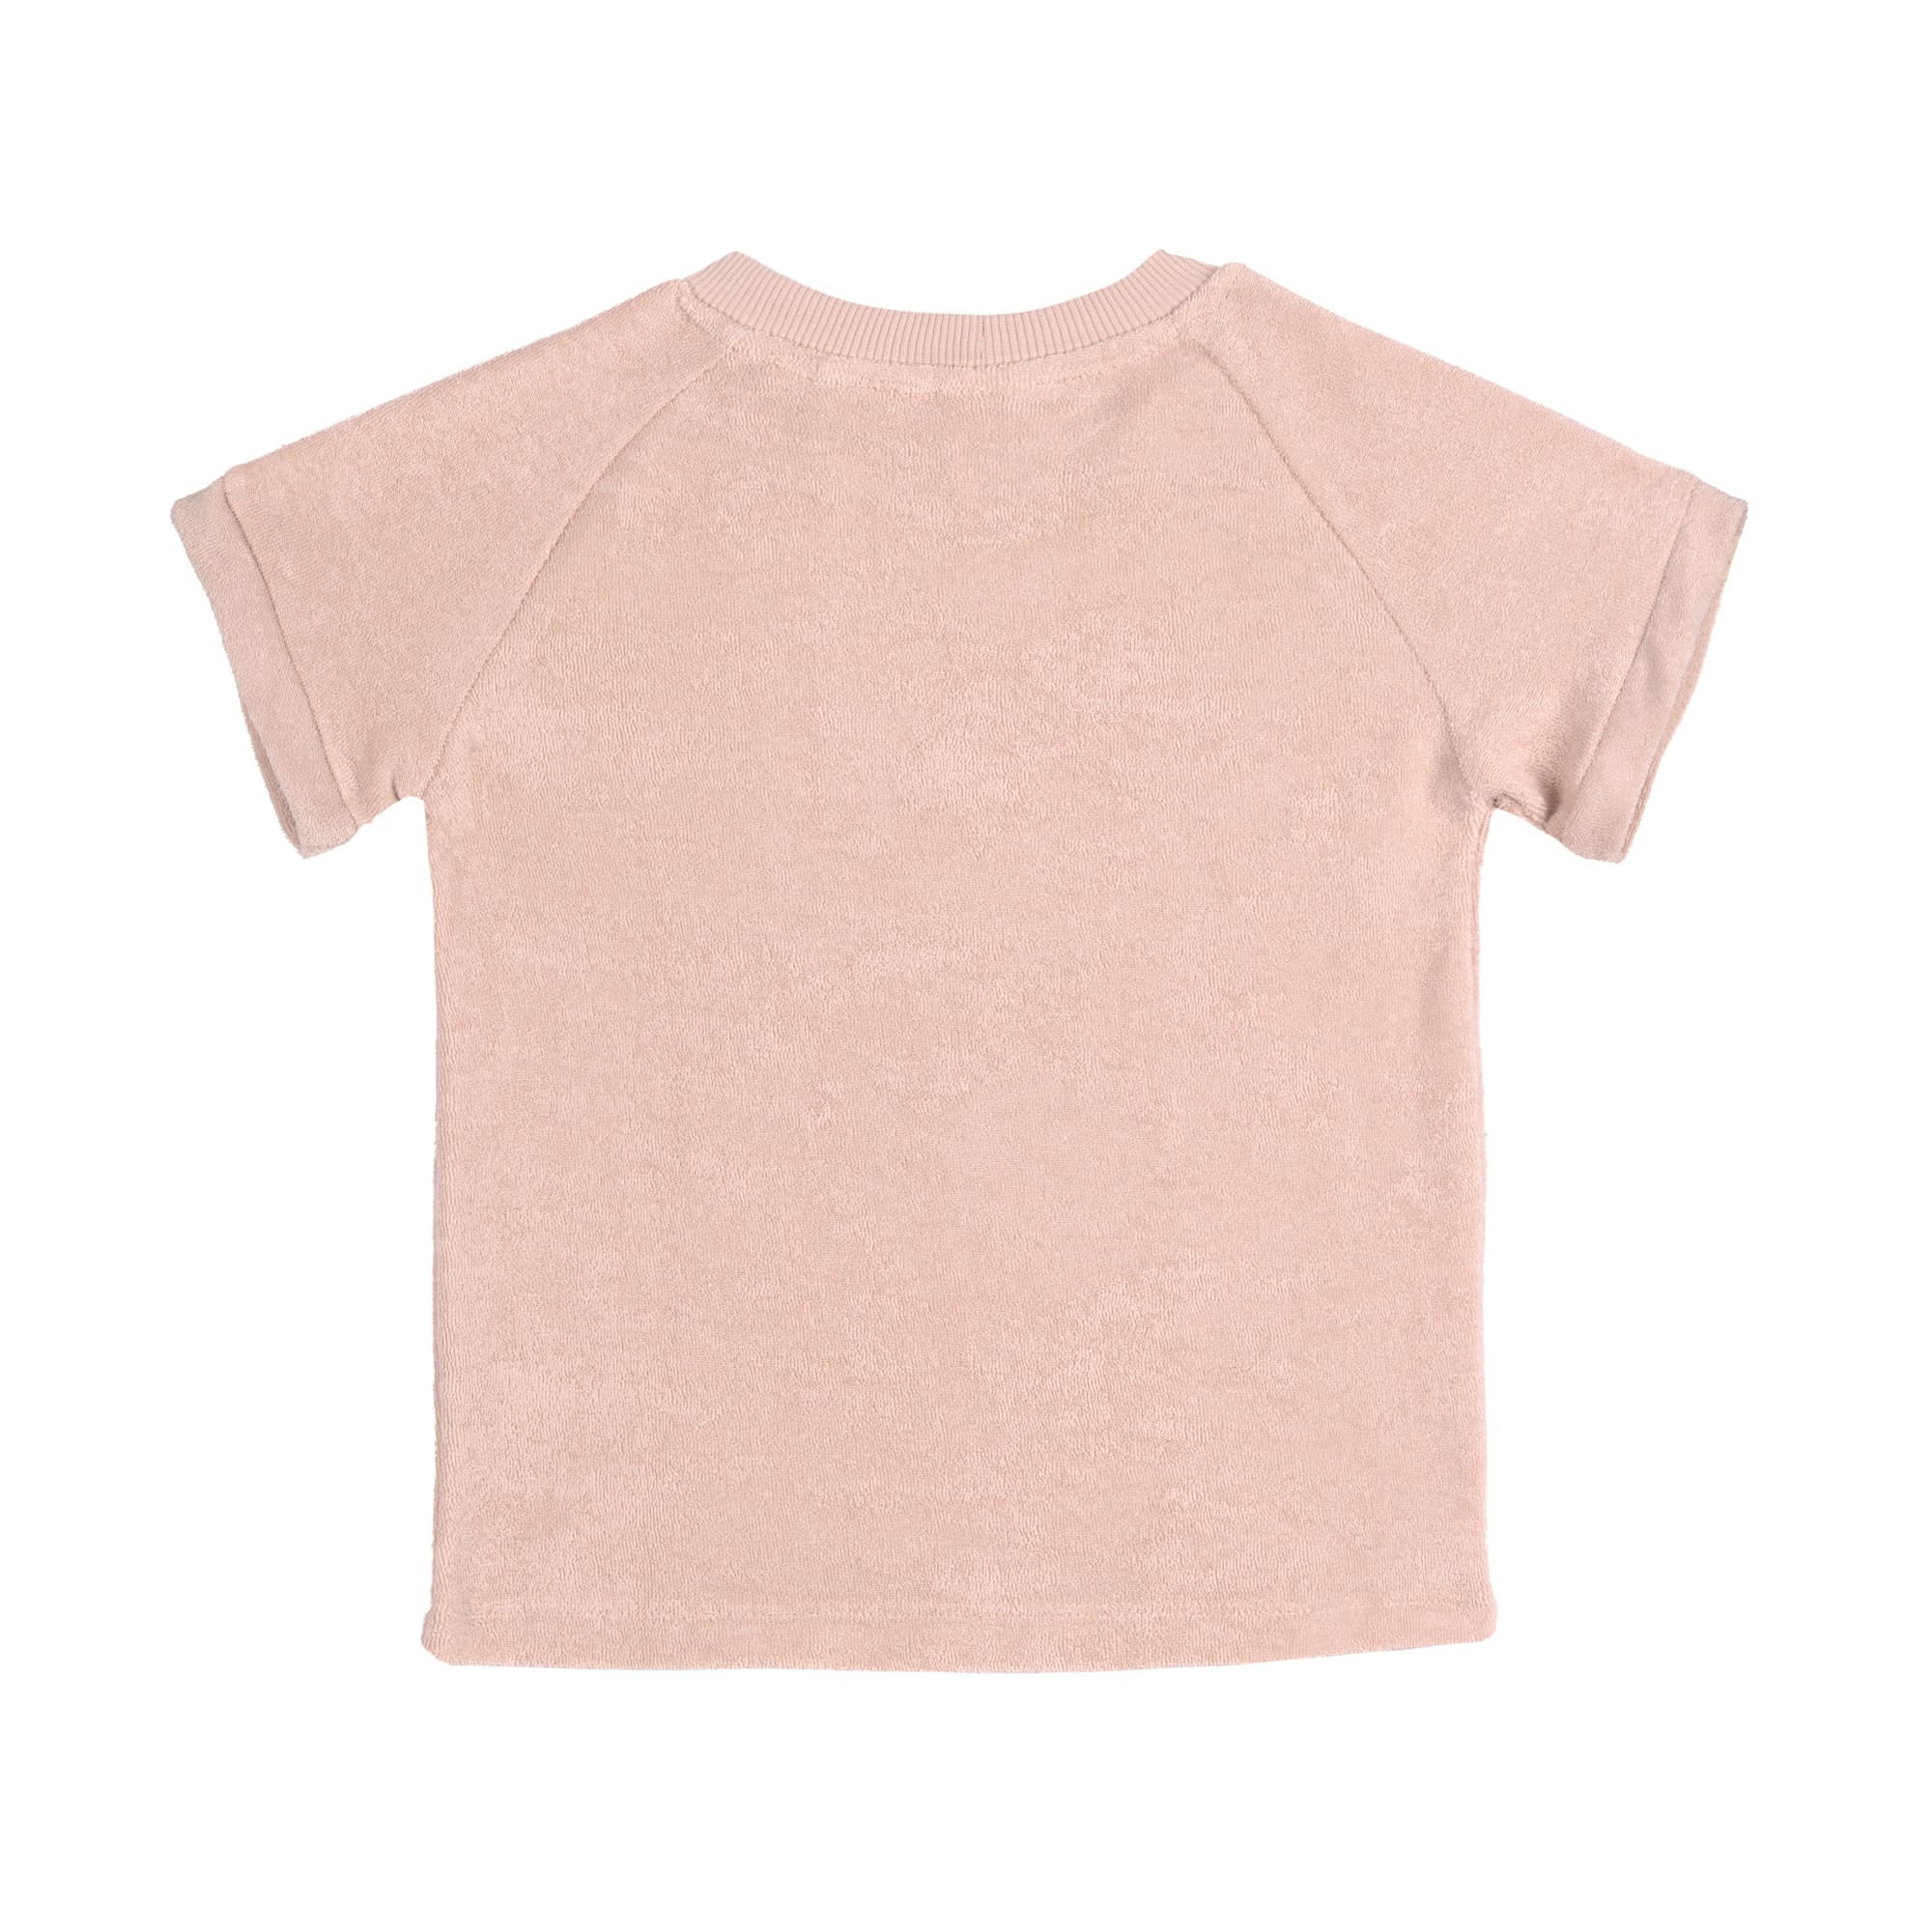 Lässig - Bequemes Frottee T-Shirt rosa